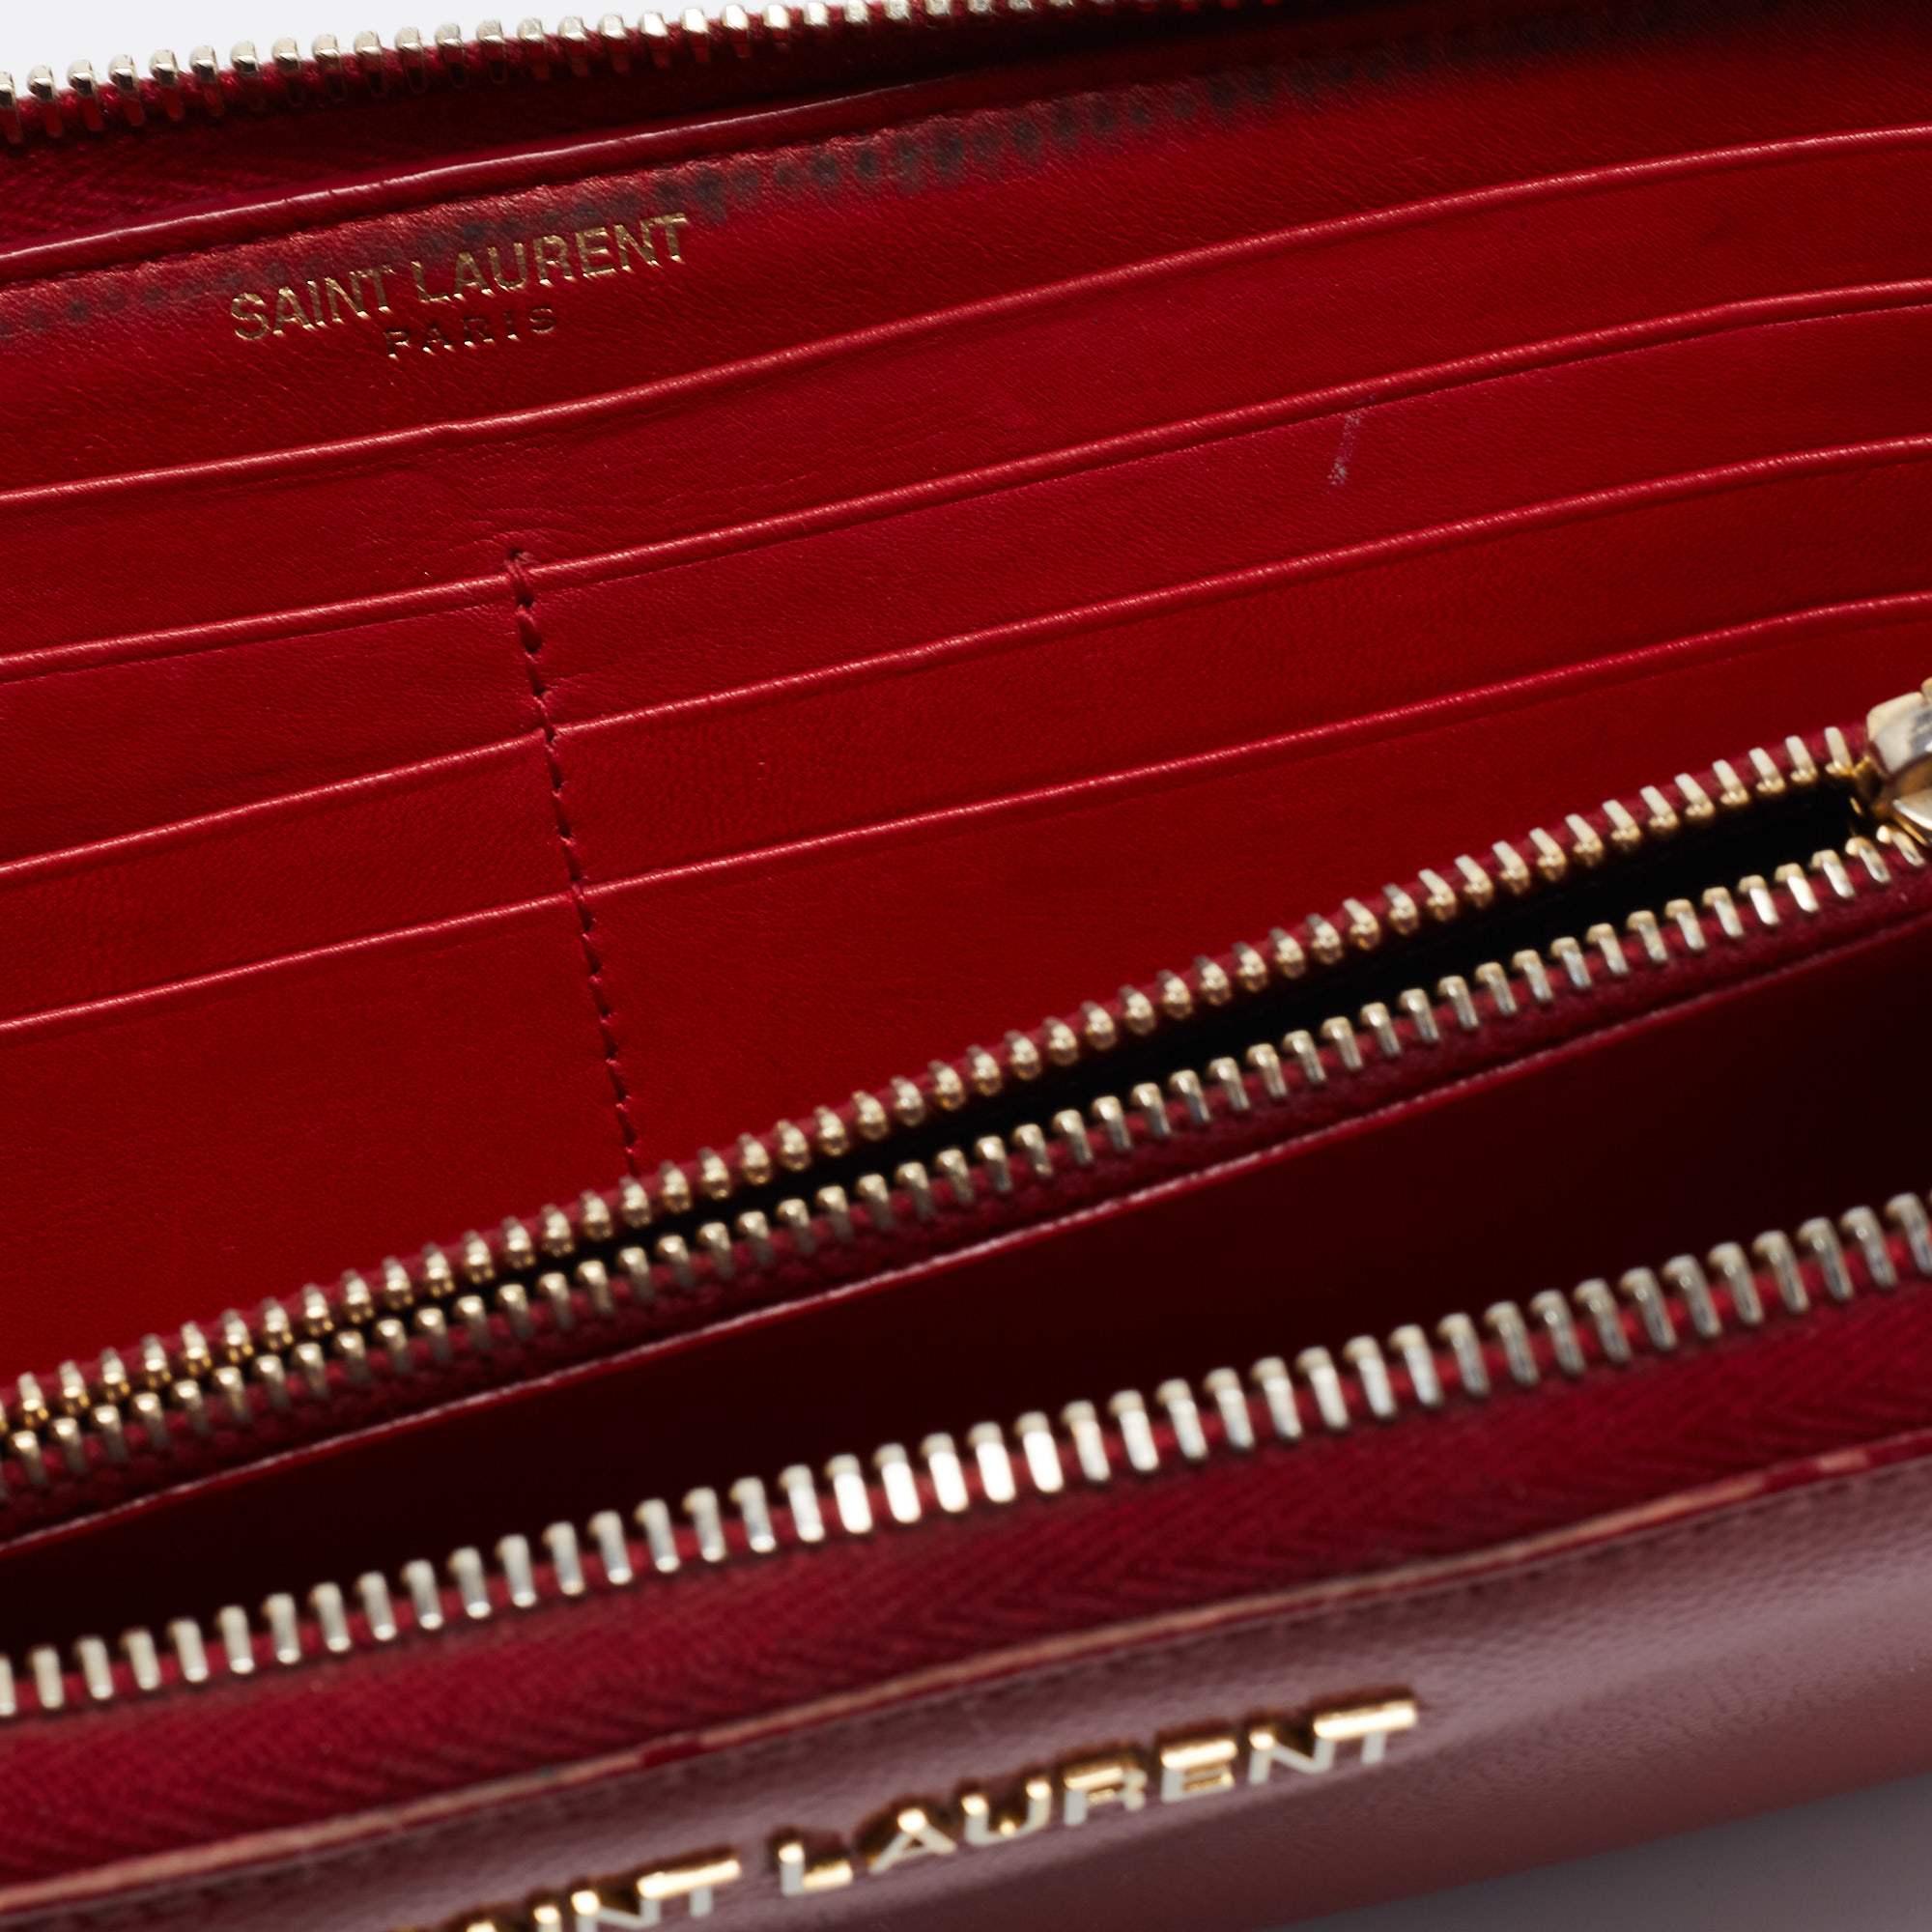 

Saint Laurent Red Patent Leather Zip Around Wallet